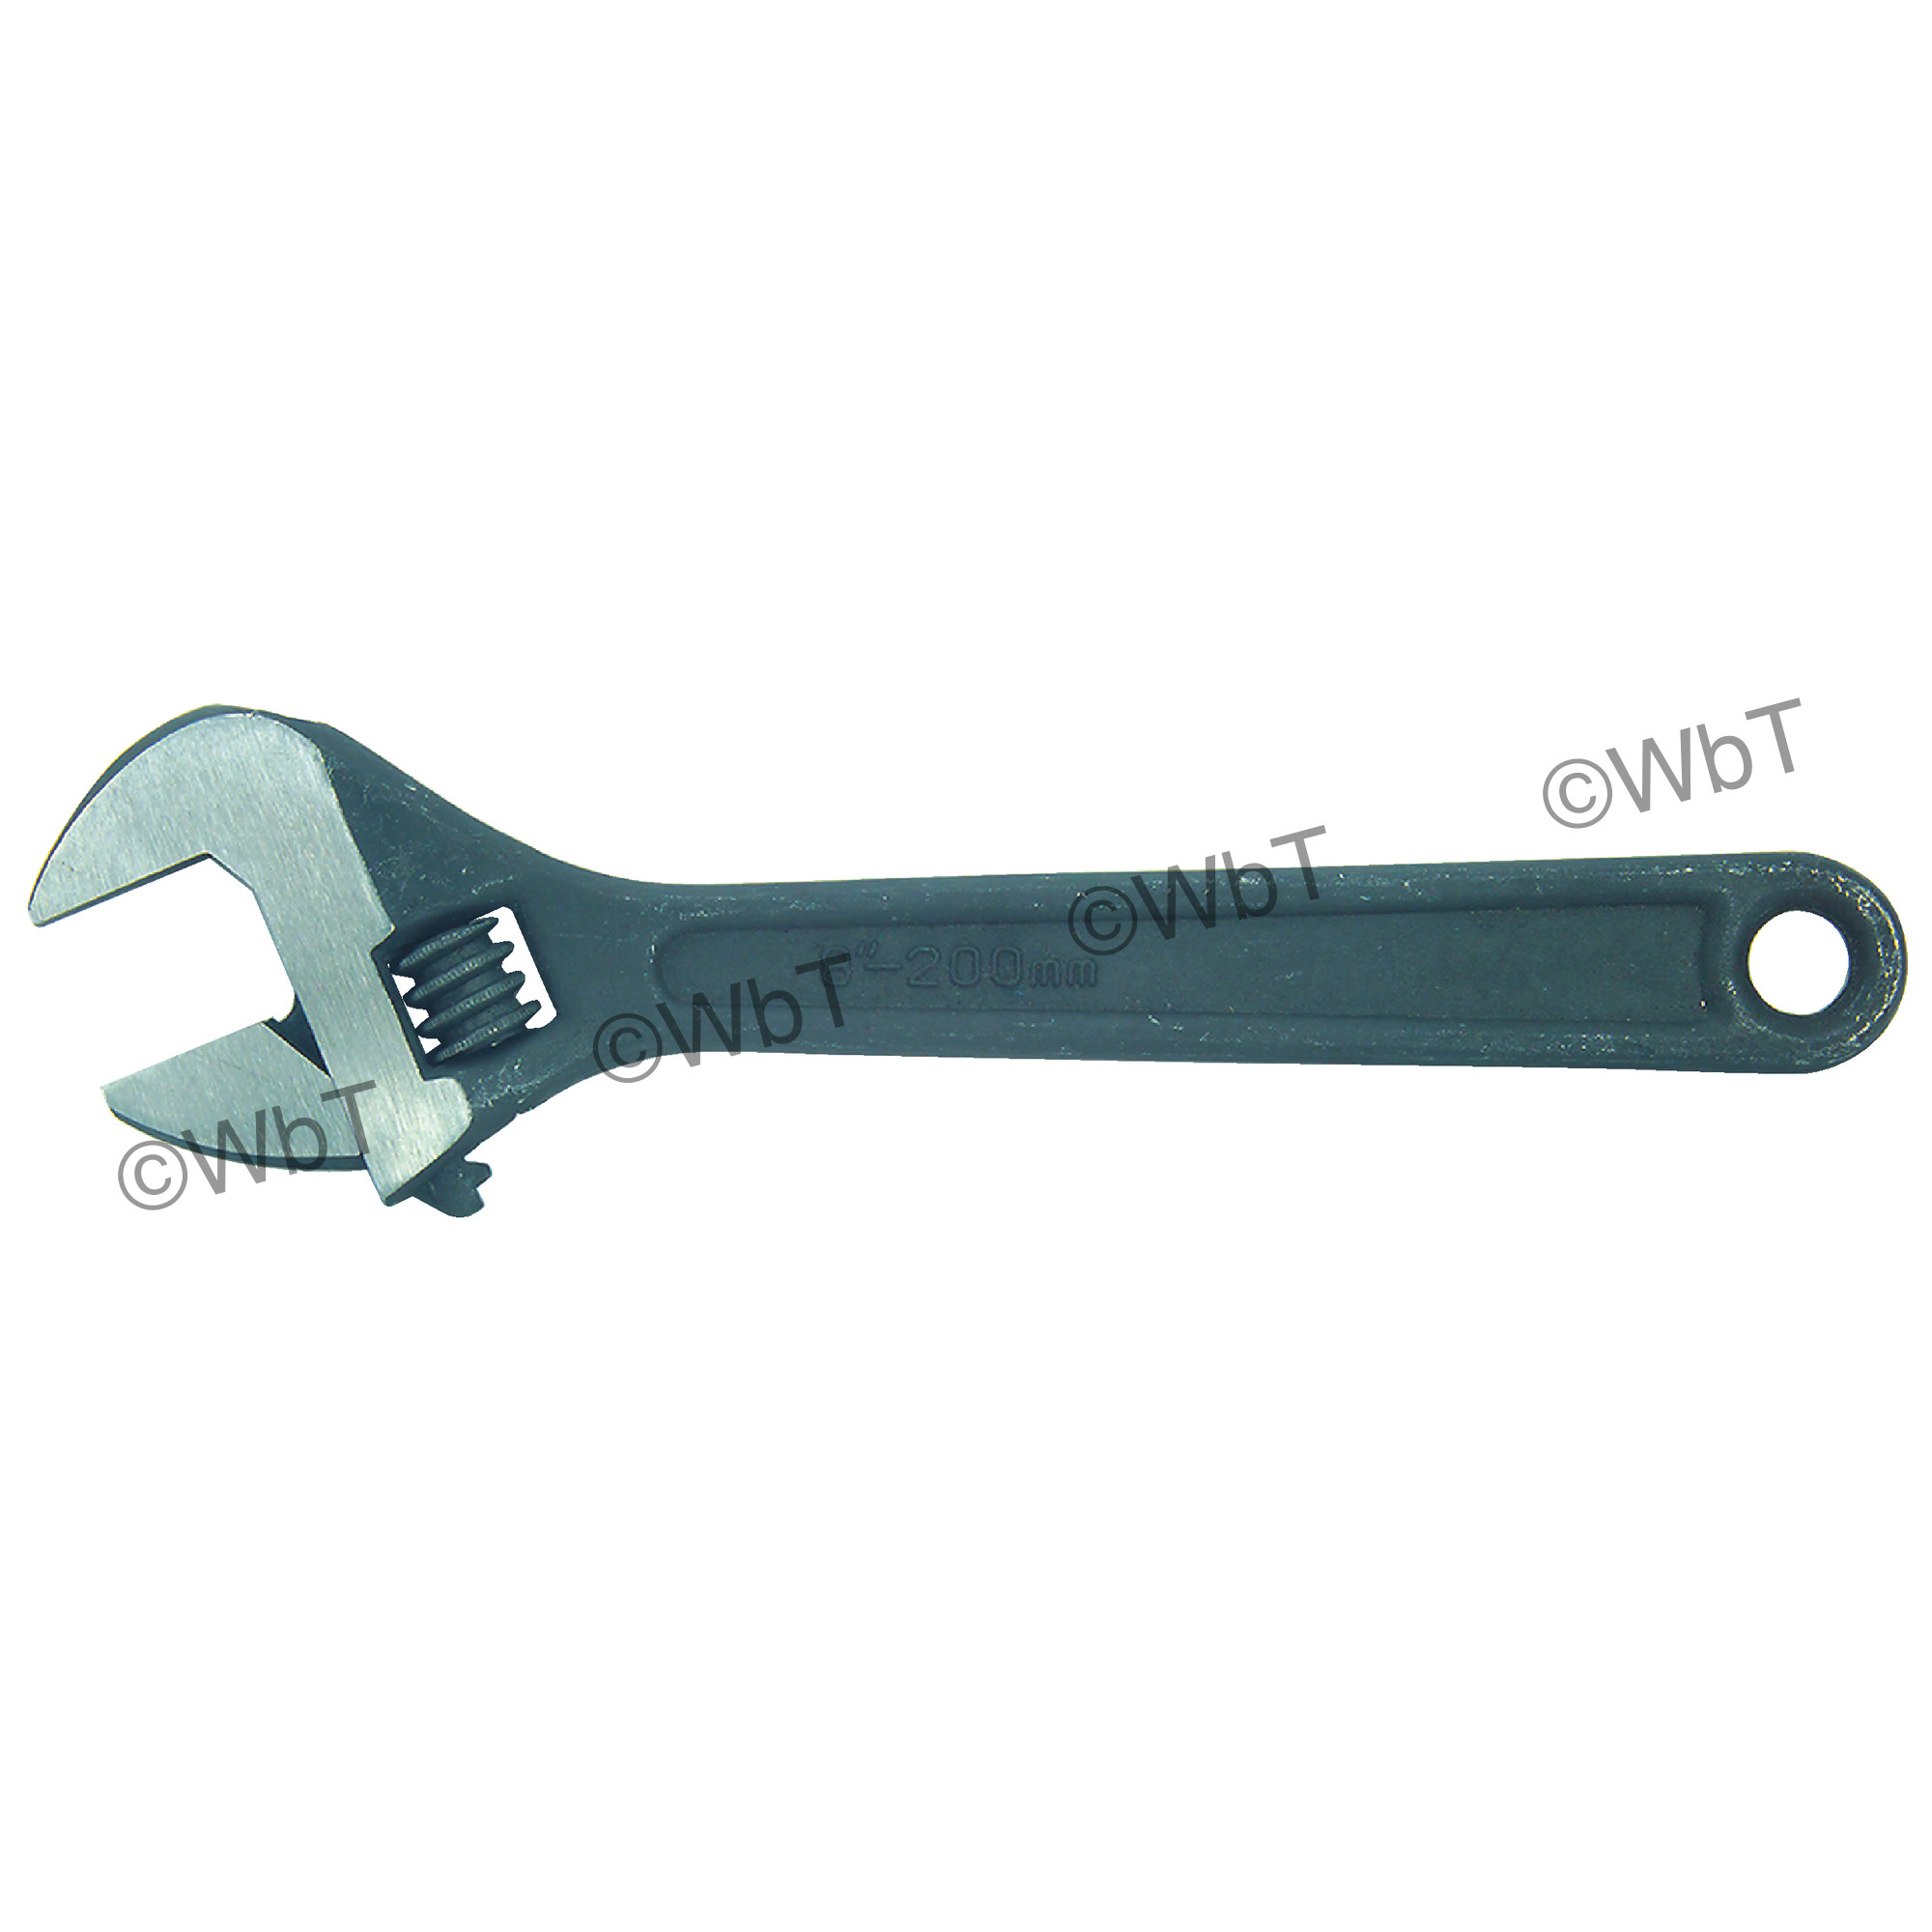 Adjustable Wrench - Model: TTC20612   SIZE: 6"